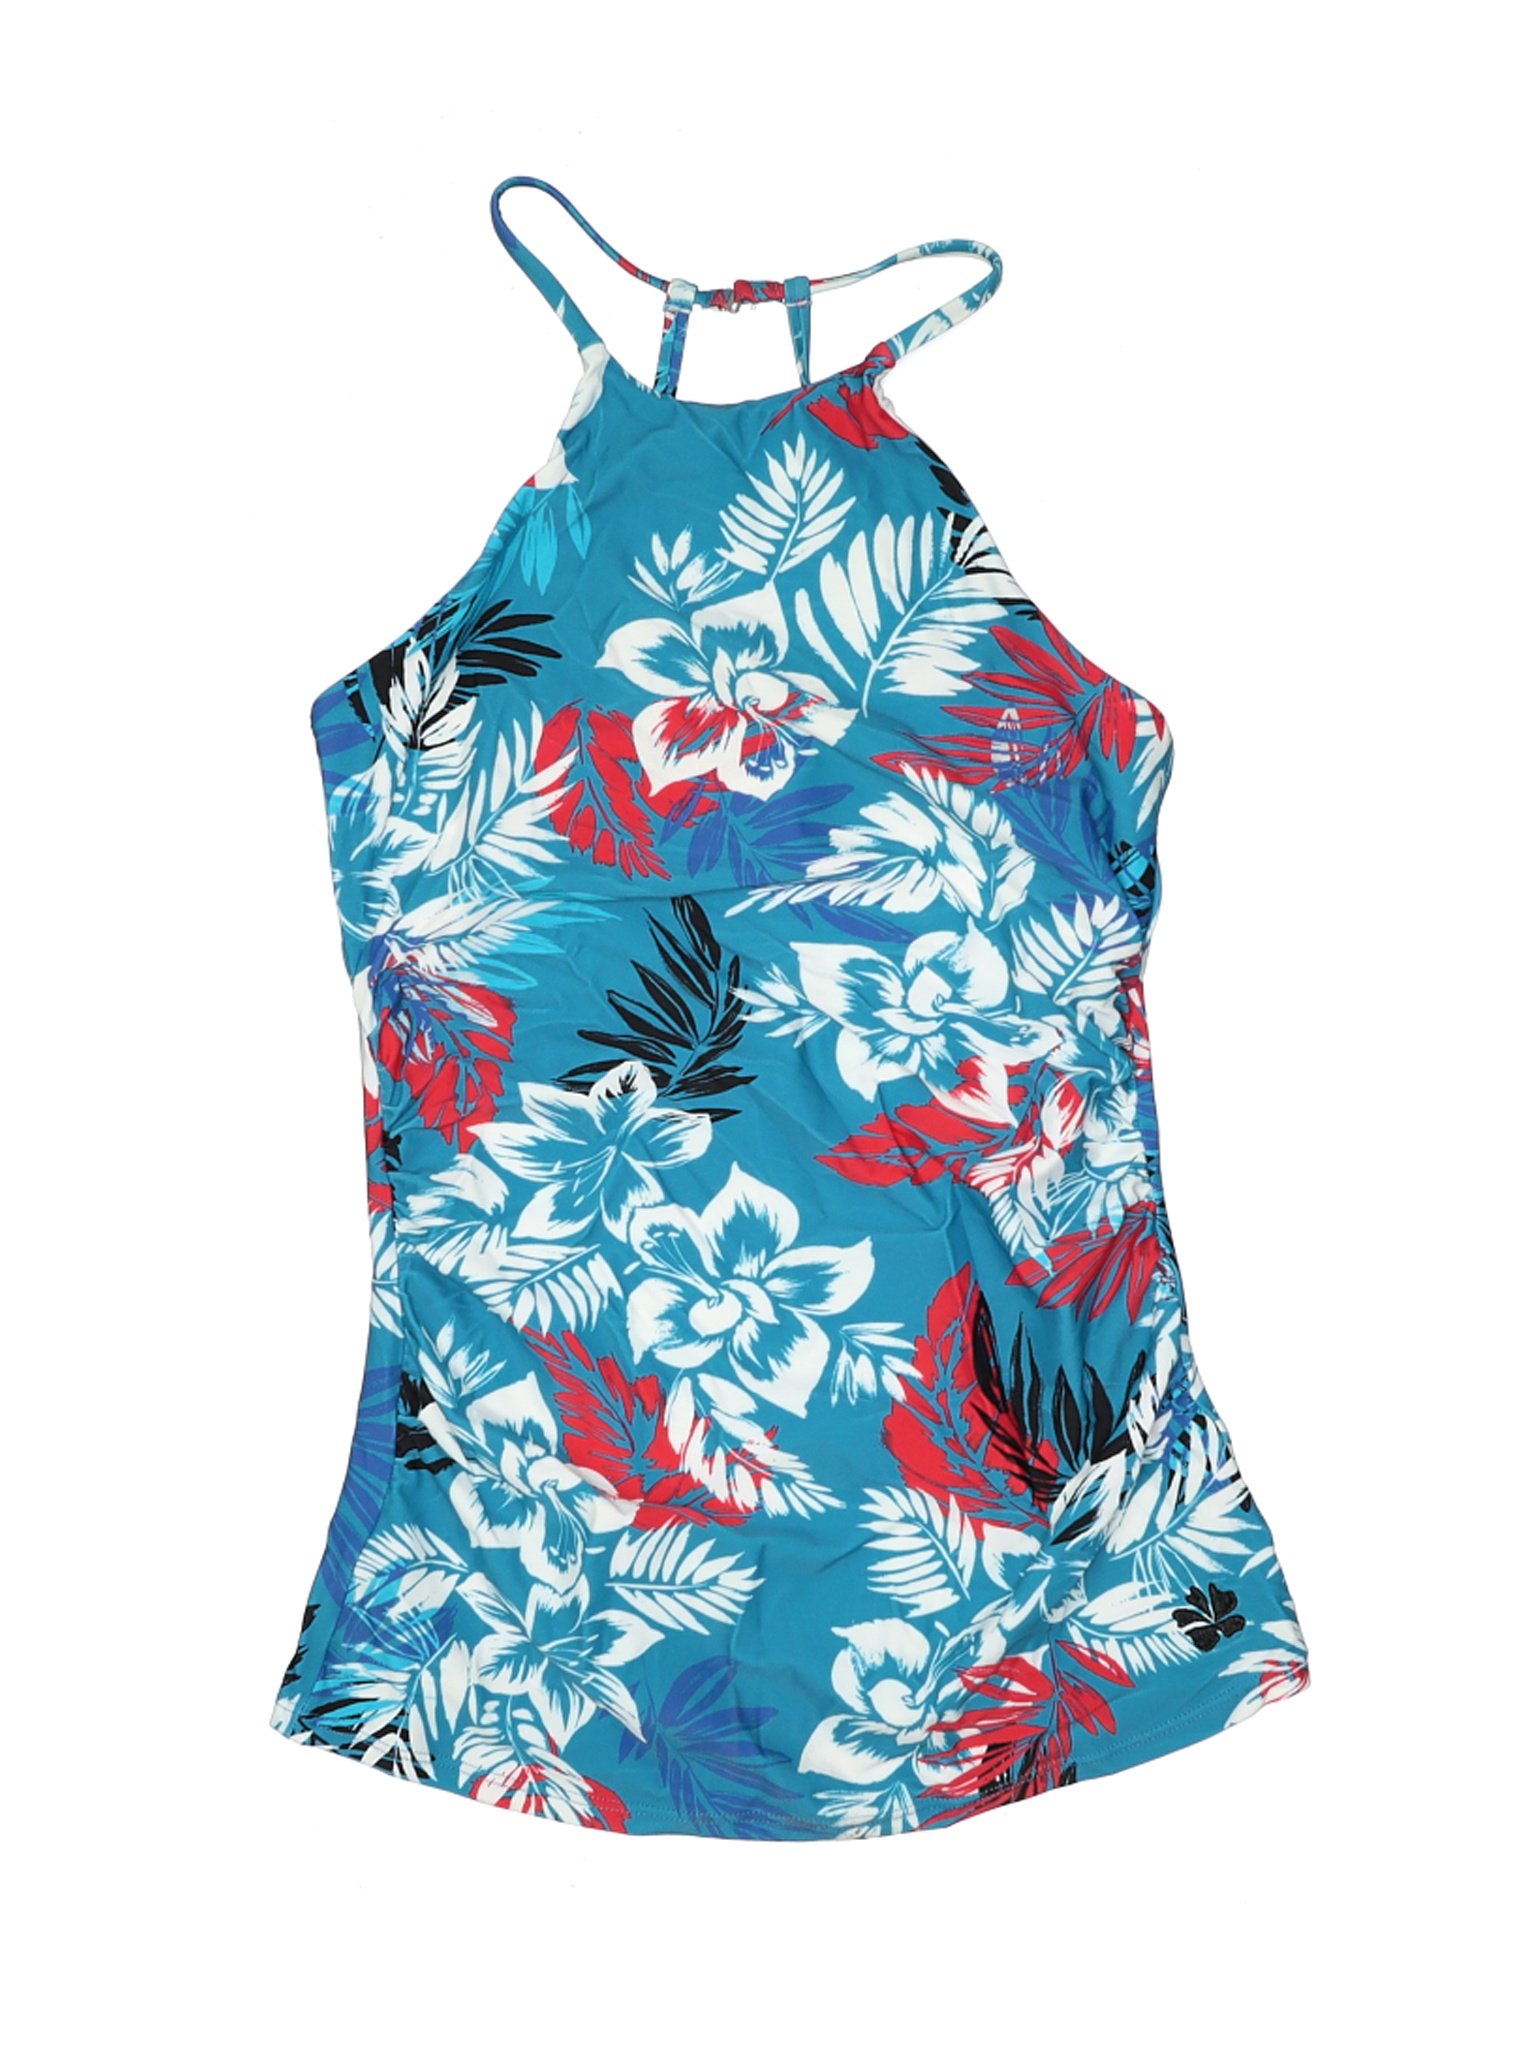 Hapari Swimwear Women Blue One Piece Swimsuit M | eBay